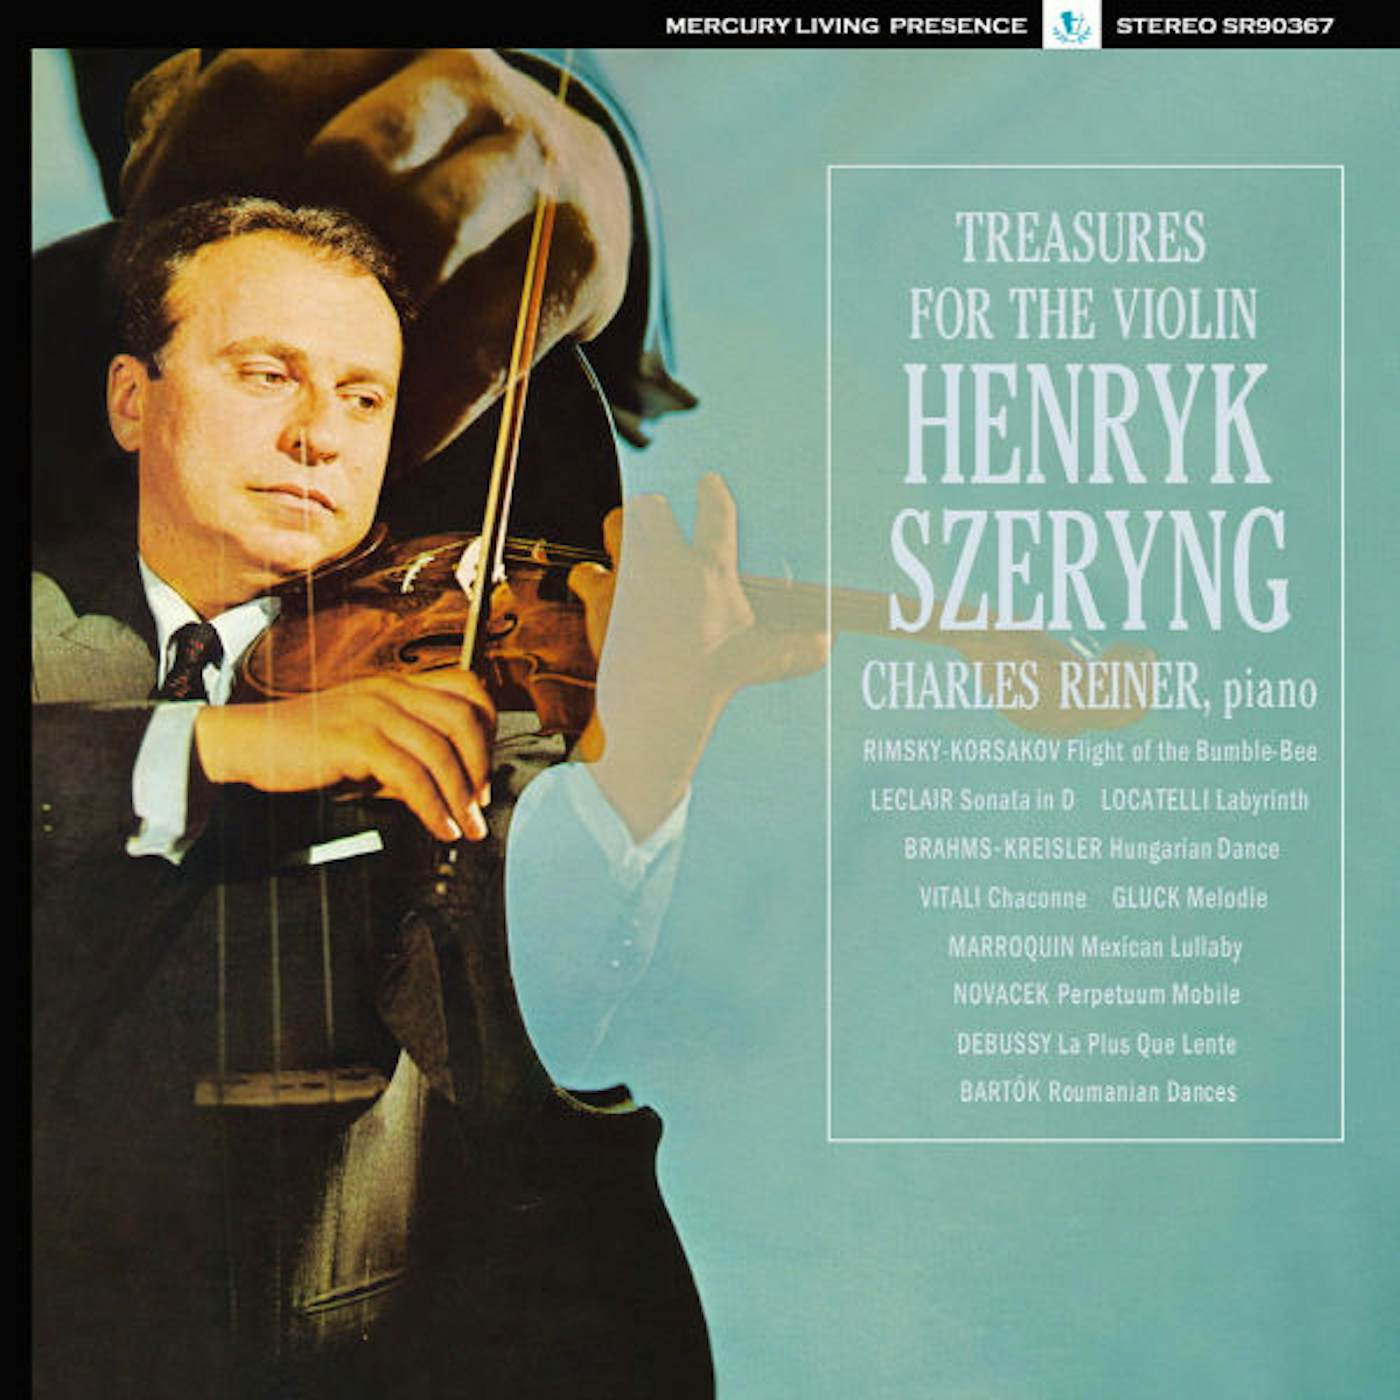 Henryk Szeryng Treasures For The Violin Vinyl Record